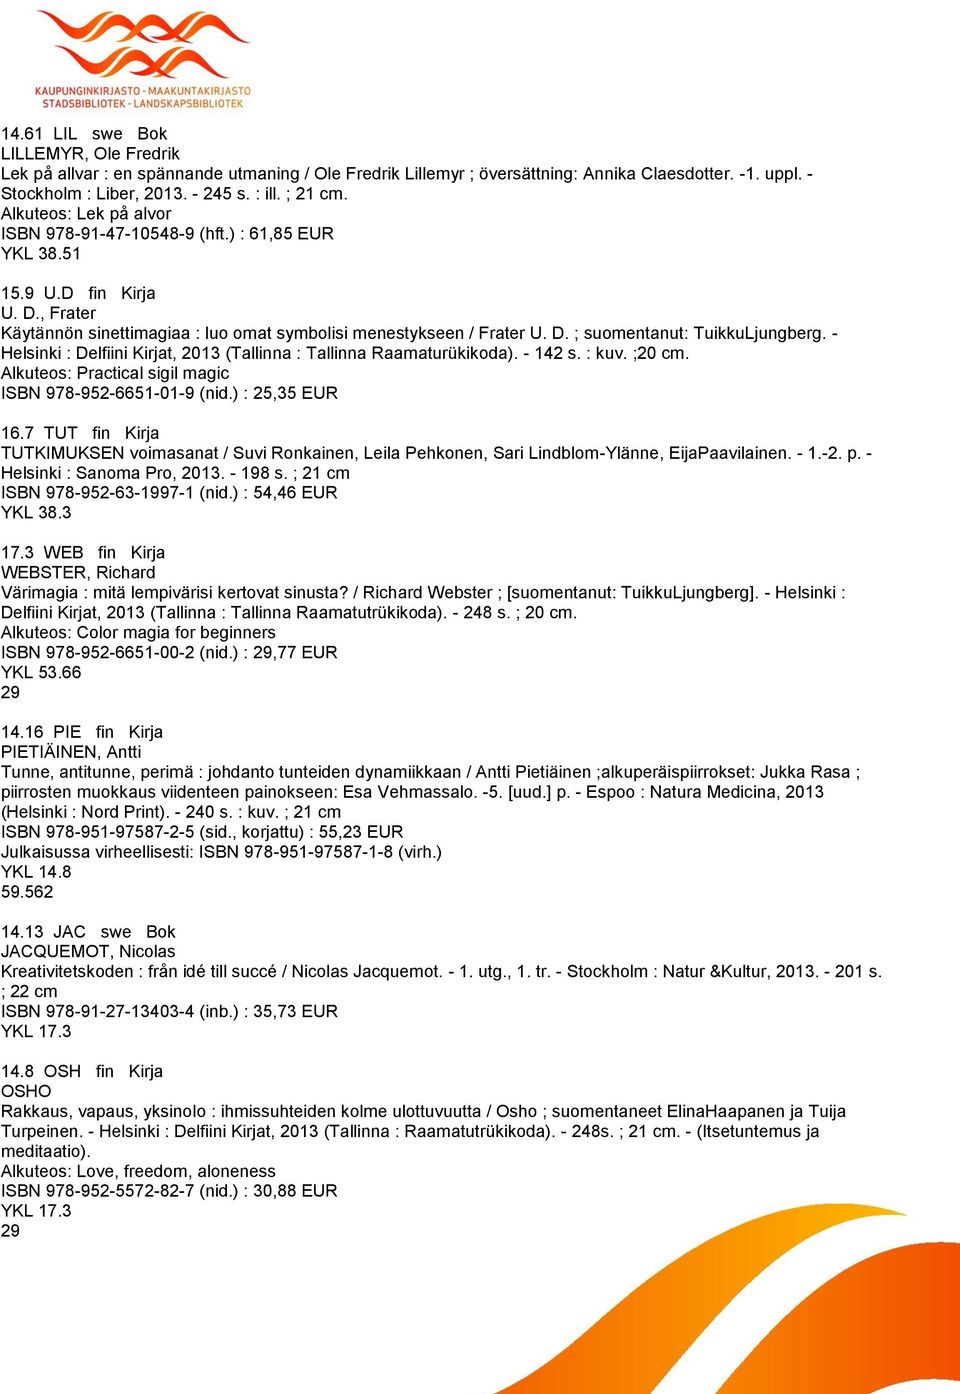 - Helsinki : Delfiini Kirjat, 2013 (Tallinna : Tallinna Raamaturükikoda). - 142 s. : kuv. ;20 cm. Alkuteos: Practical sigil magic ISBN 978-952-6651-01-9 (nid.) : 25,35 EUR 16.